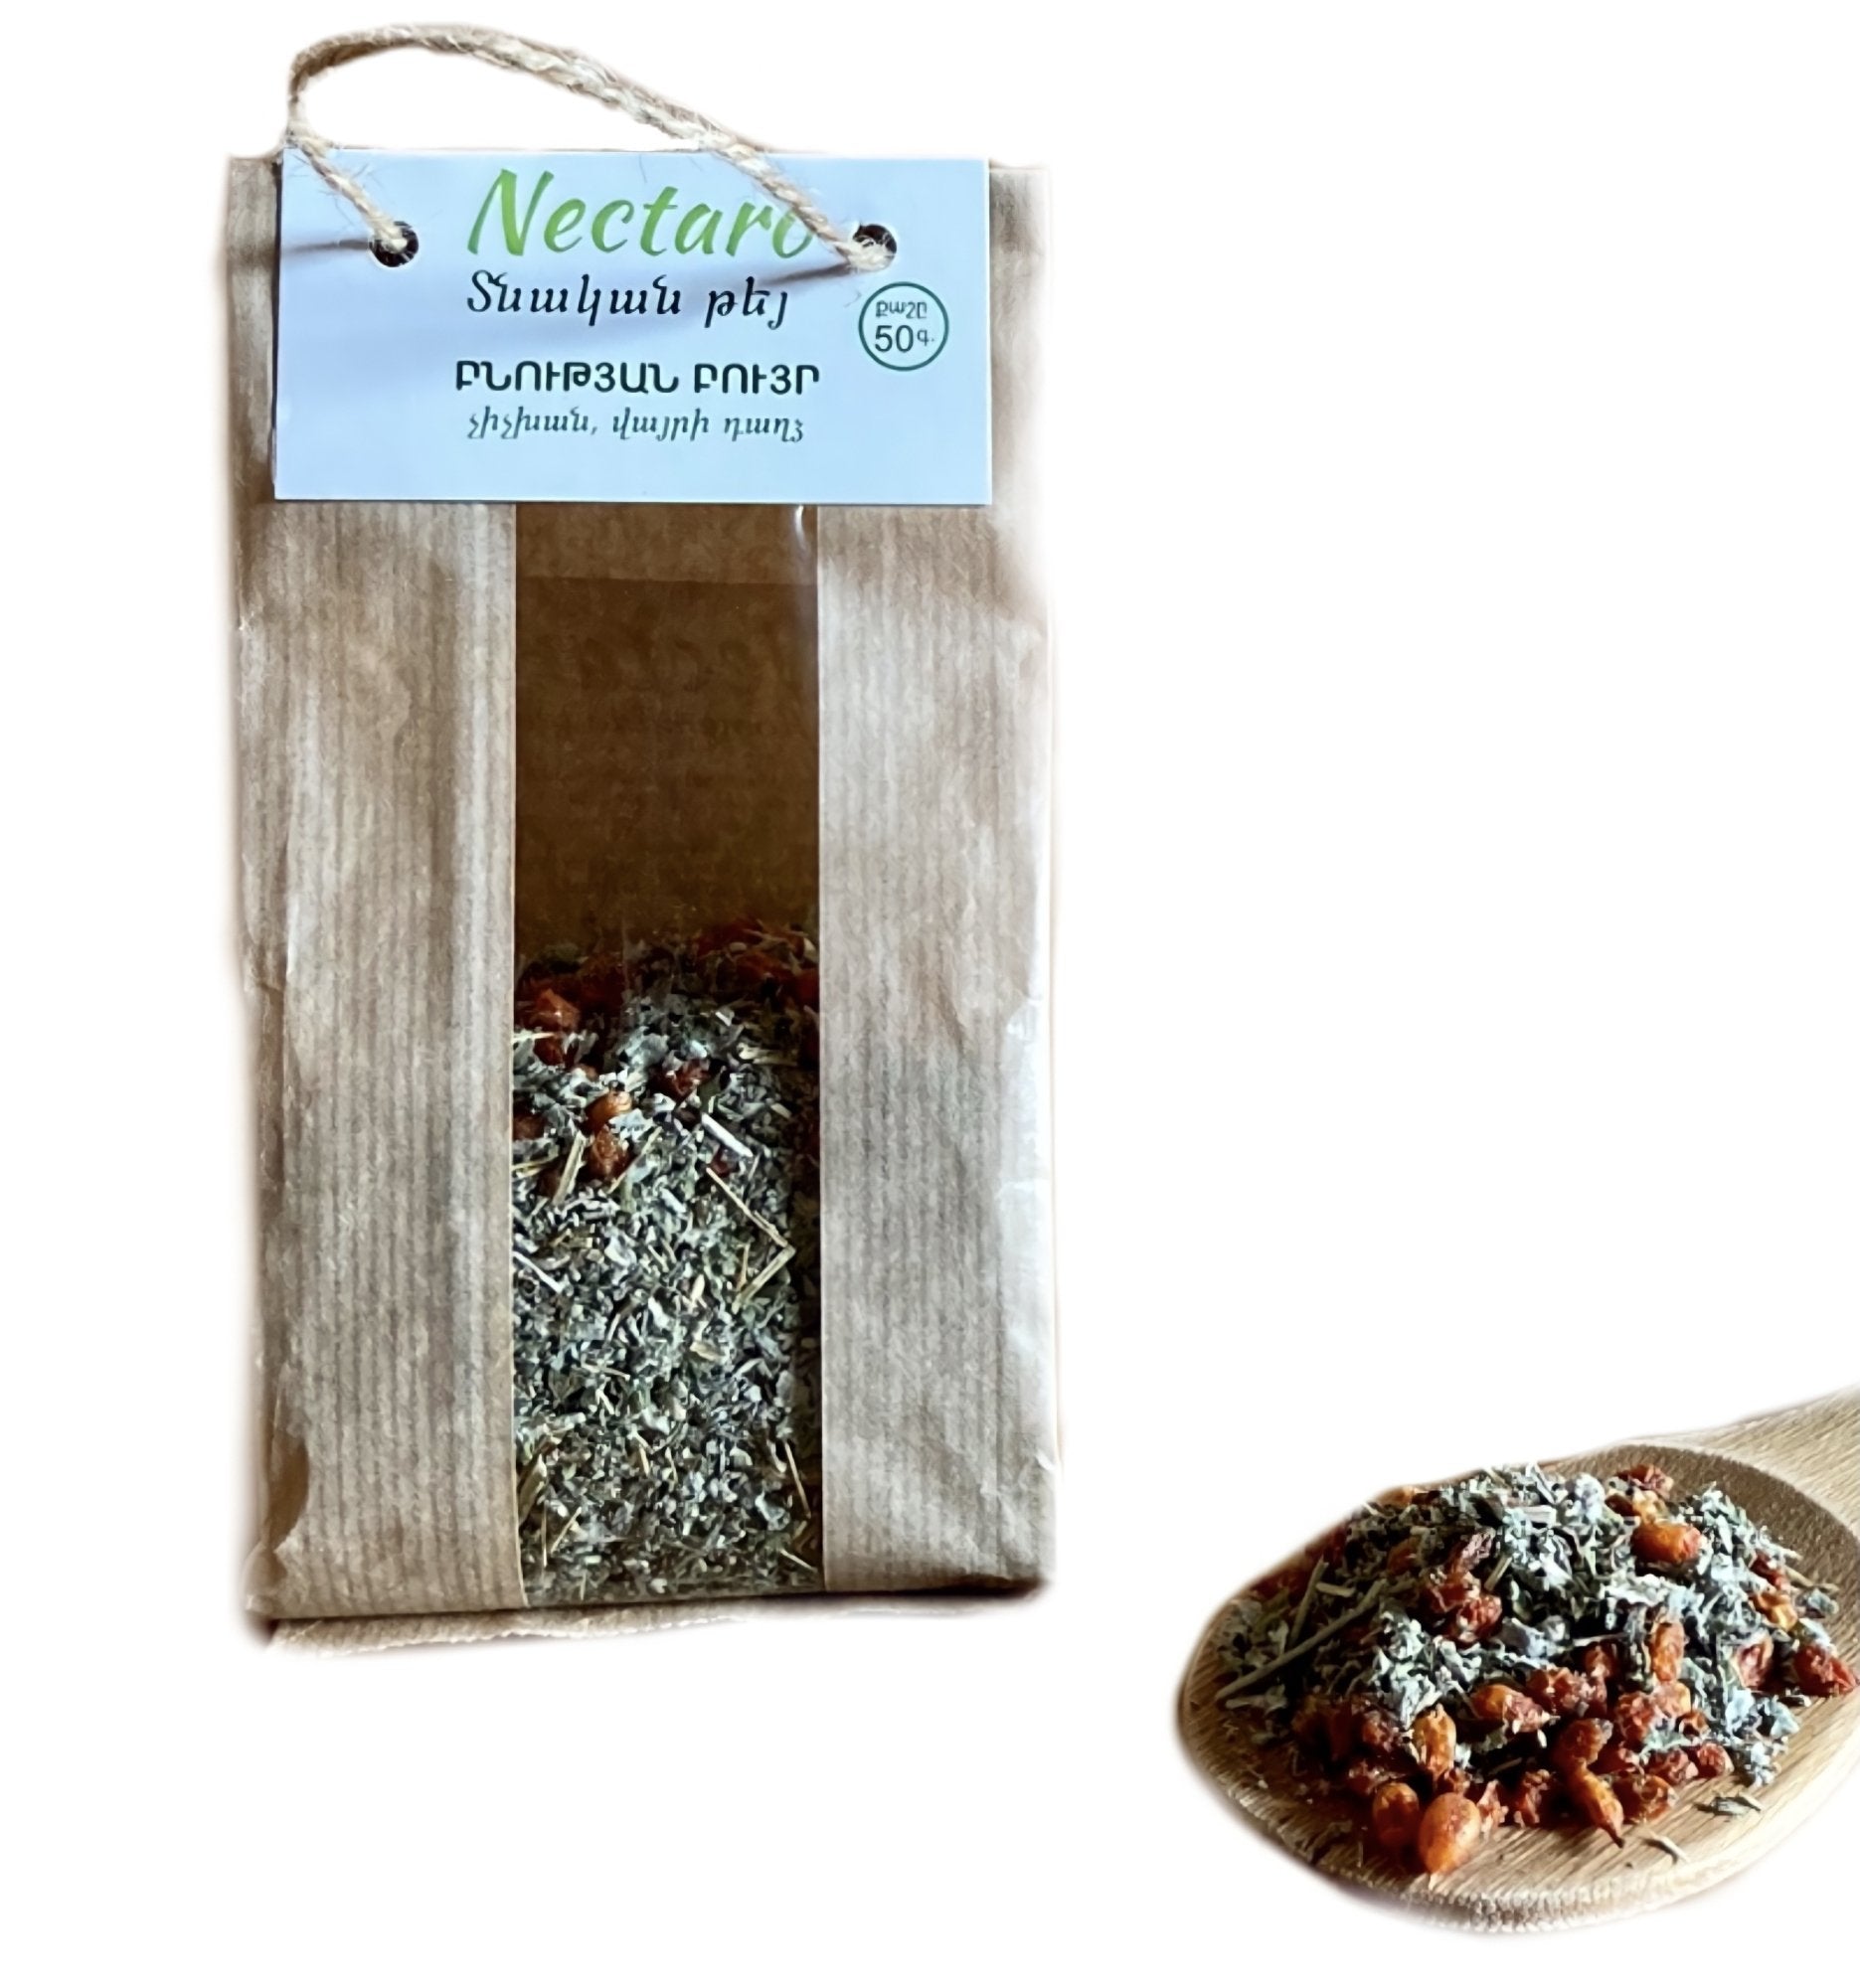 Nectaro Sea Buckthorn and Wild Mint Herbal Tea - Natural Aroma - 50g